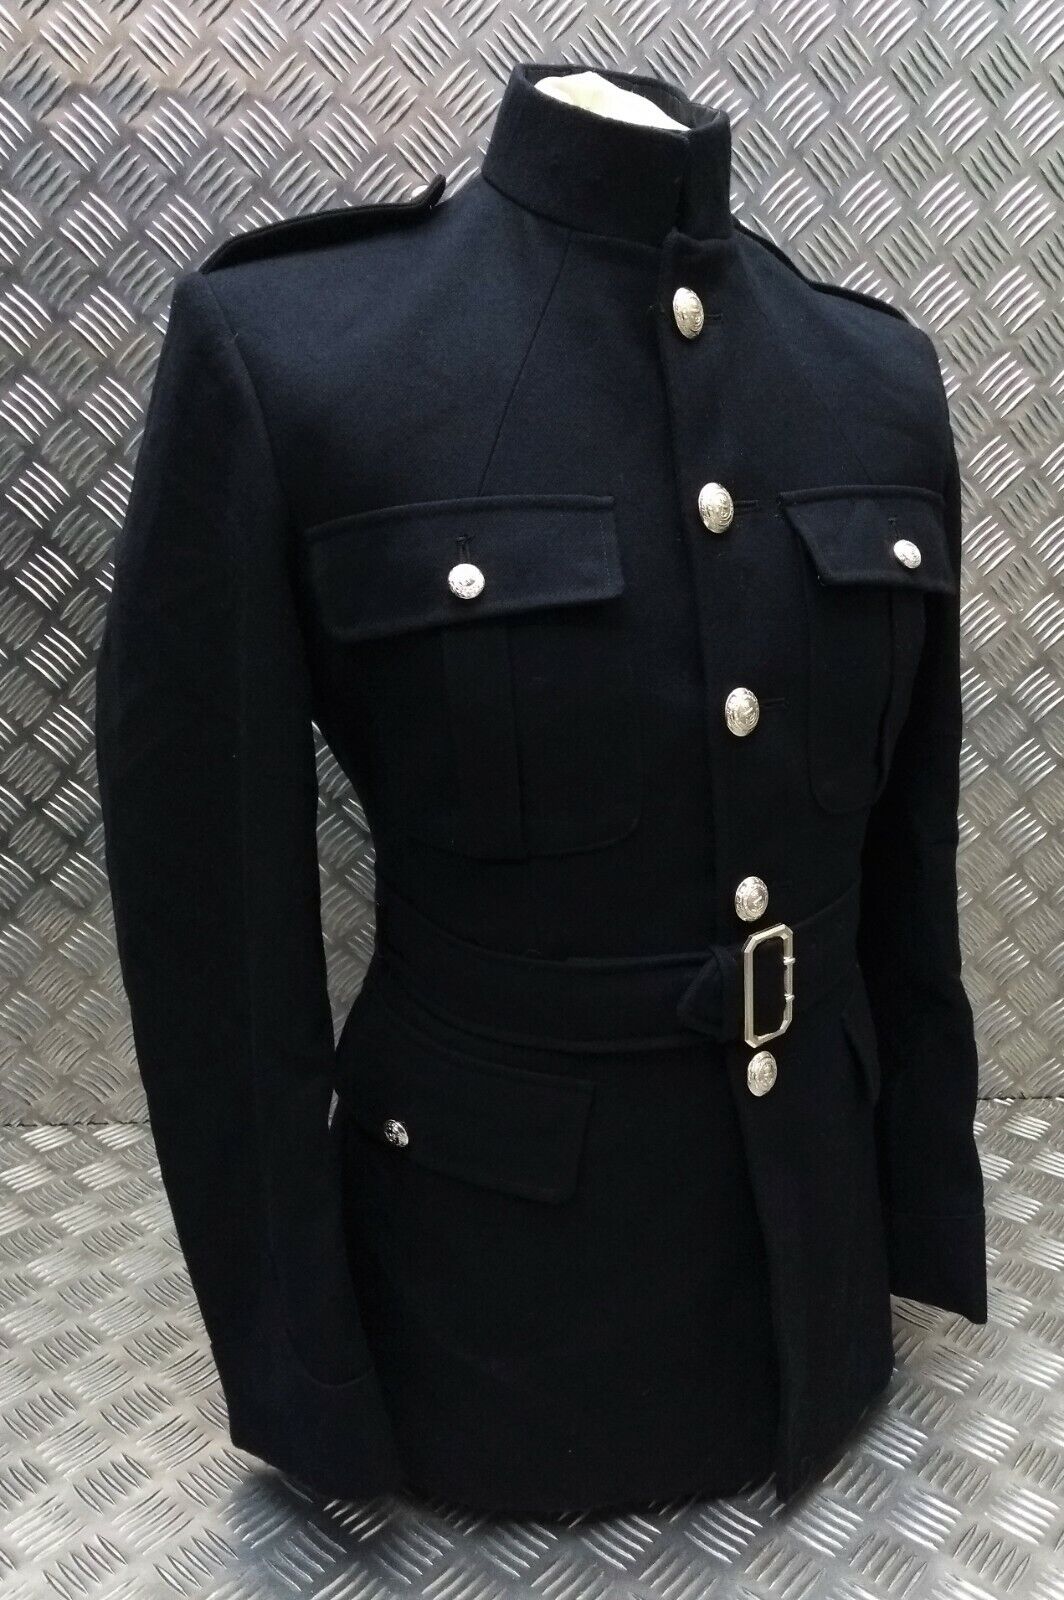 Genuine British Royal Marines No1 Issue Dress RM Jacket & Belt All Sizes - NEW